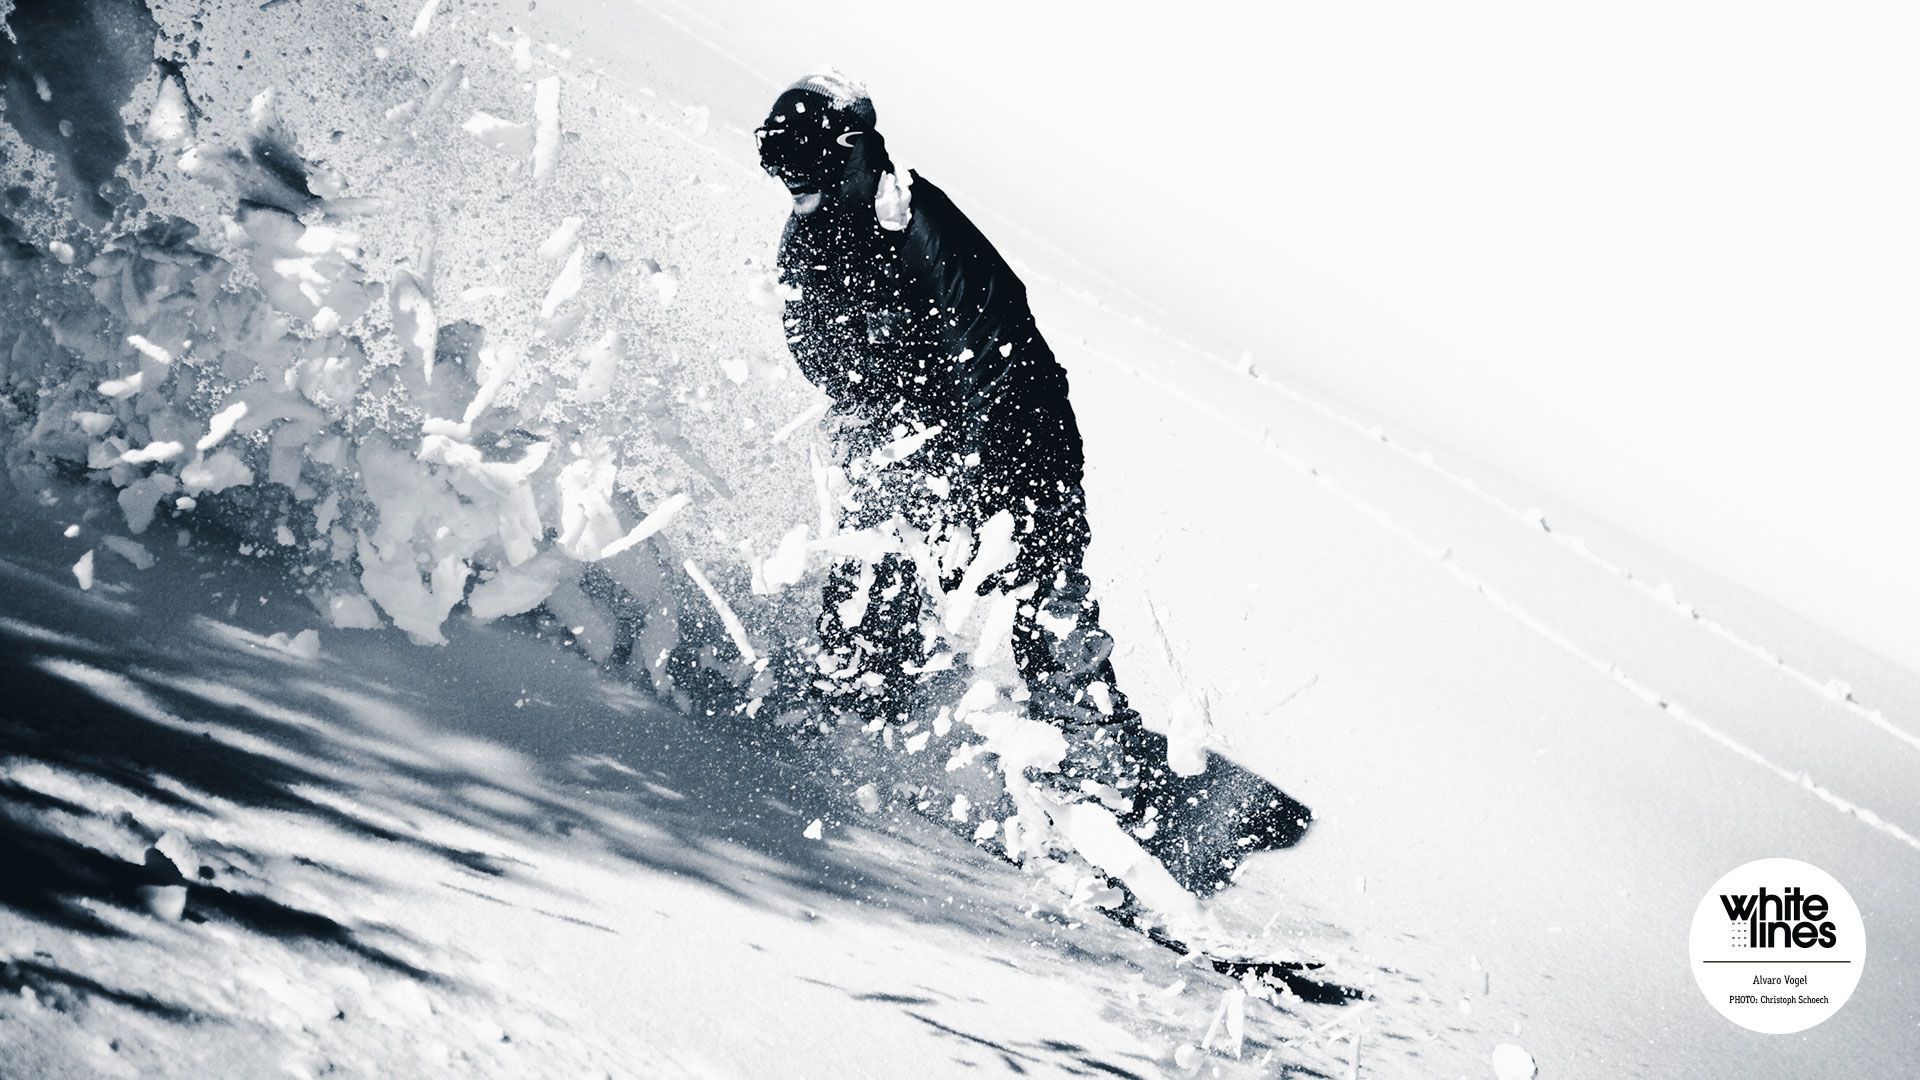 Snowboarding wallpaper 1920x1080